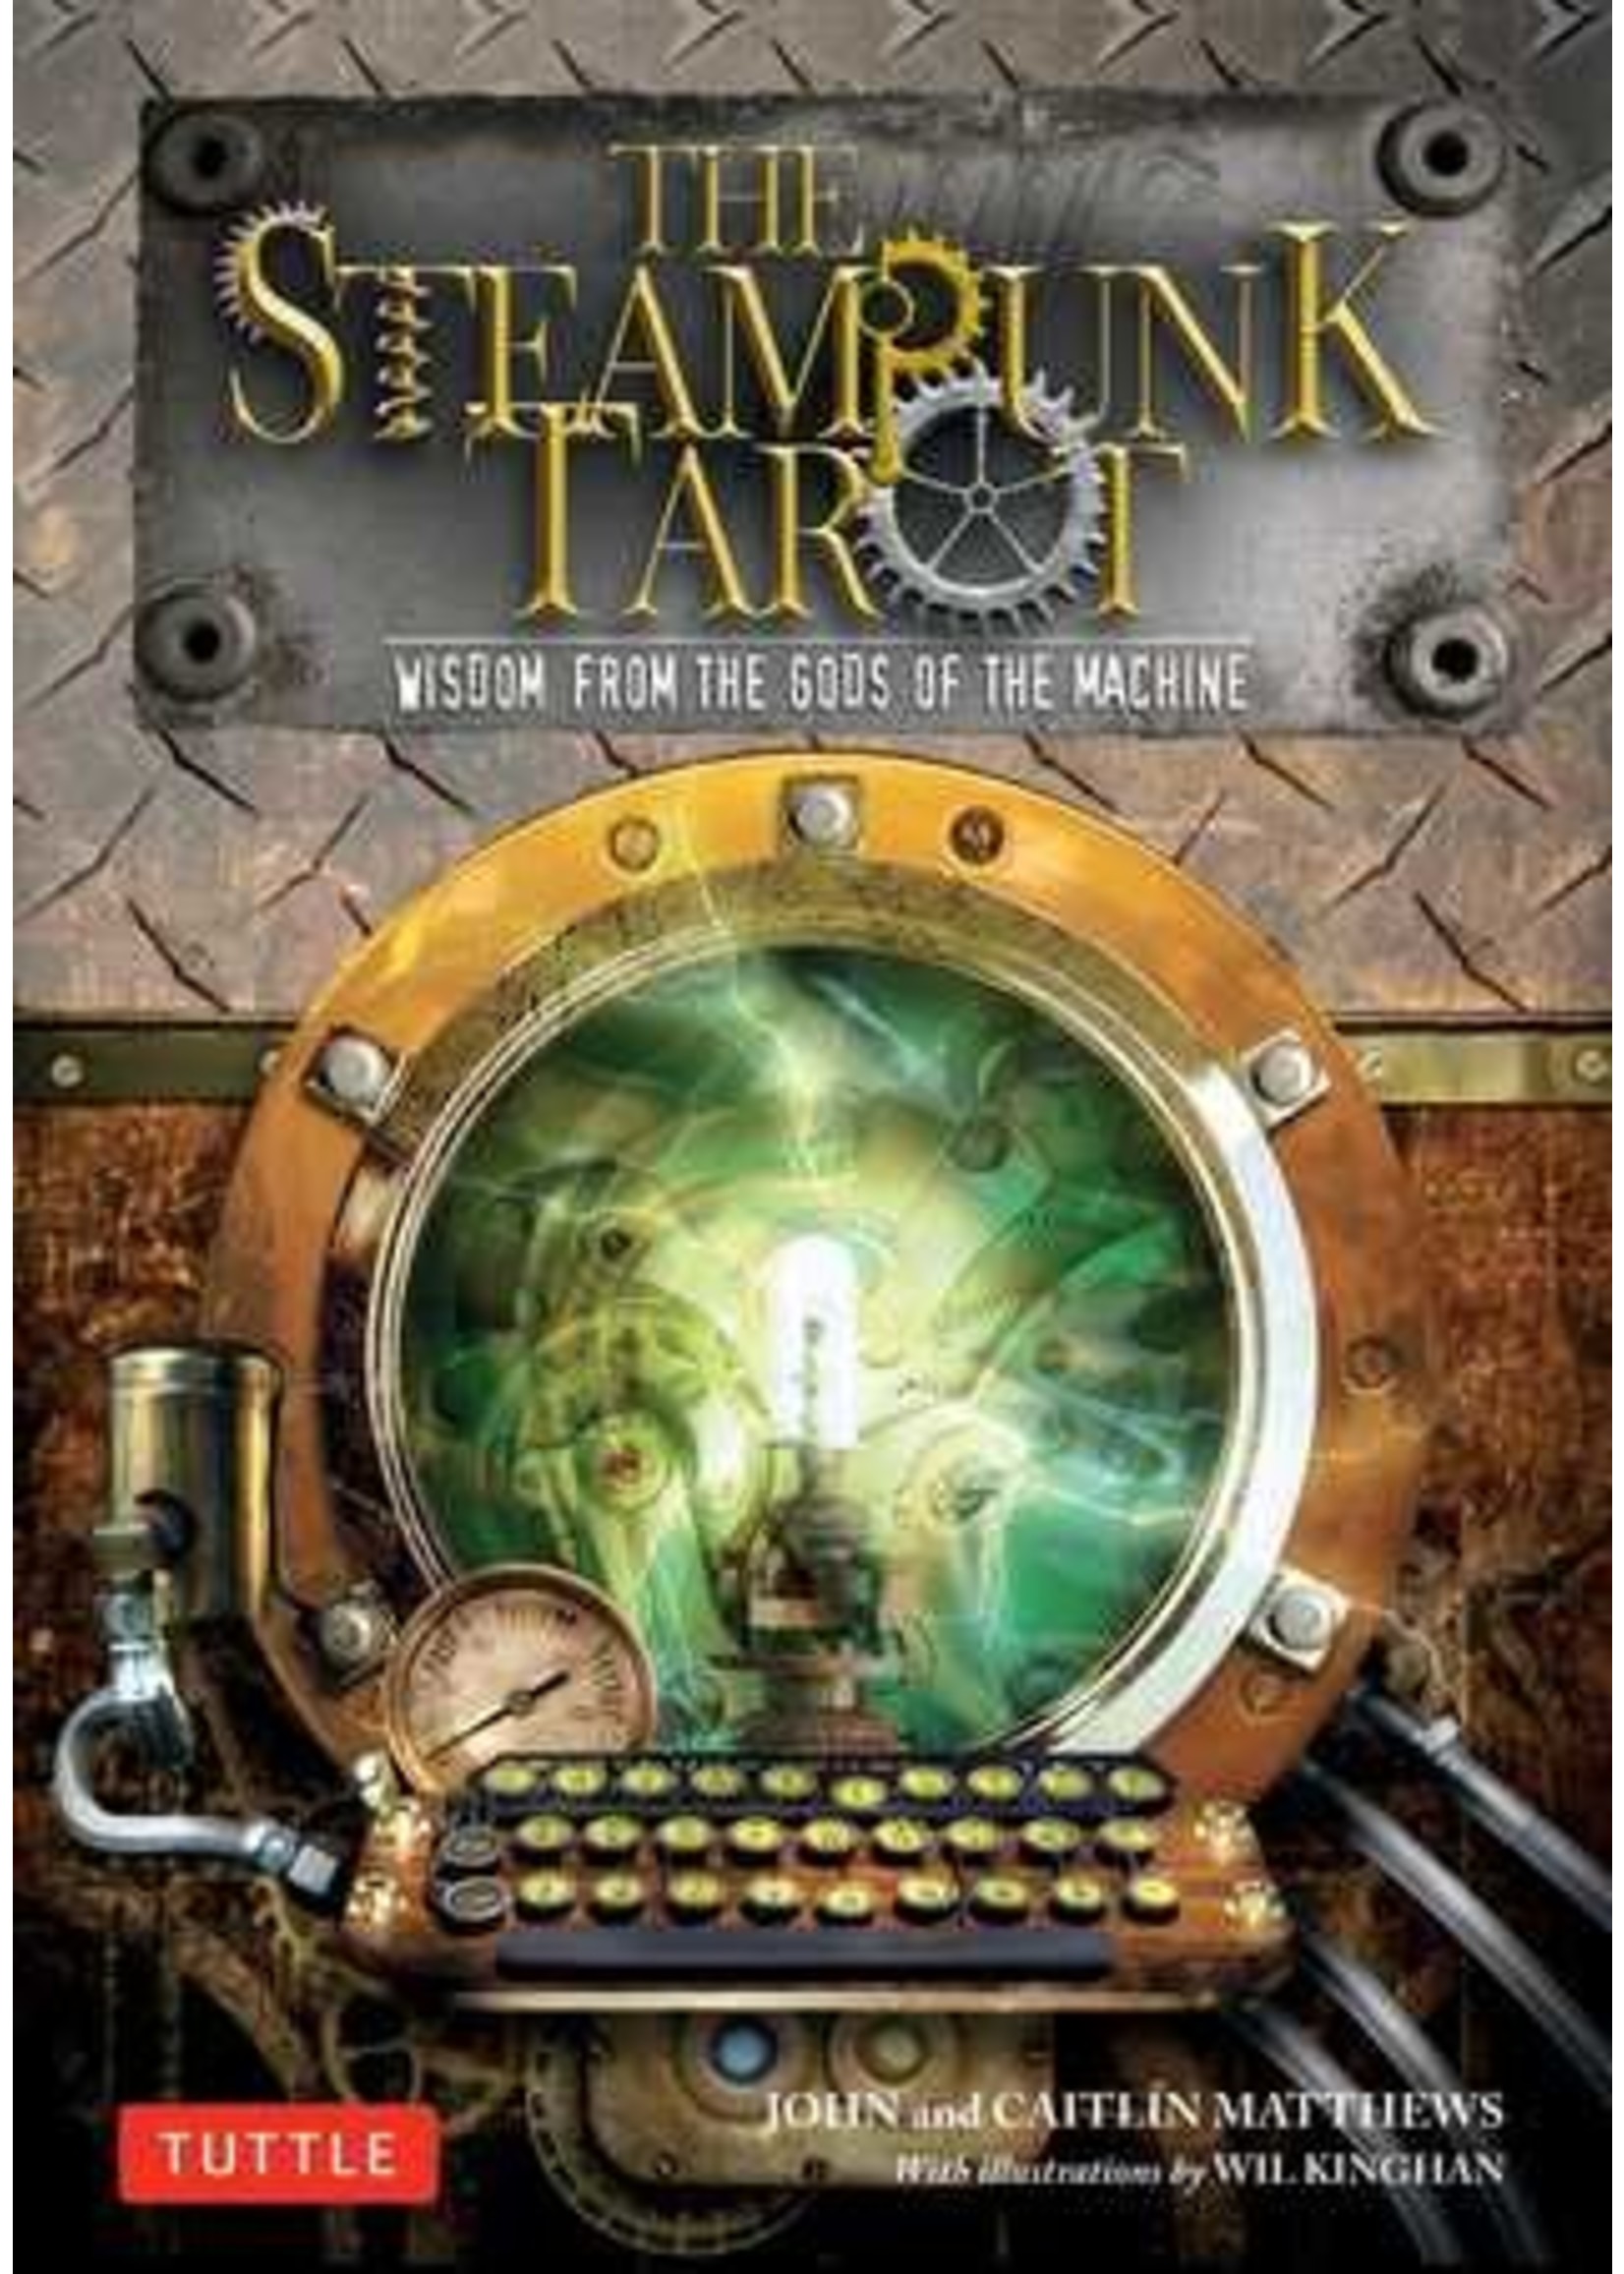 Steampunk Tarot: Wisdom from the Gods of the Machine by John Matthews, Caitlín Matthews, Wil Kinghan